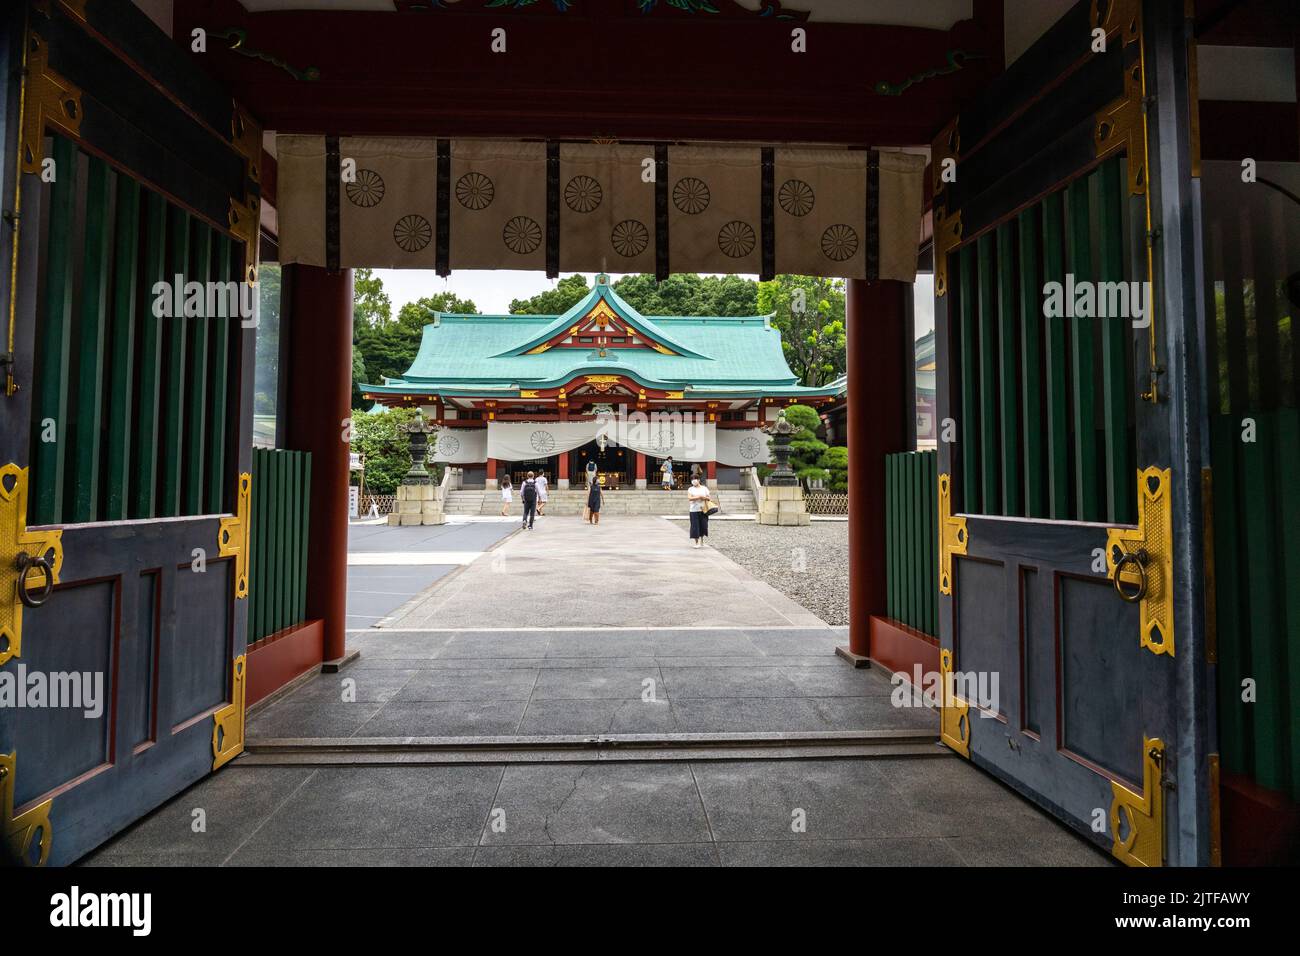 The main entrance to the Hie Jinja shrine in Nagatacho, Chiyoda, Tokyo, Japan. The Shinto shrine is one of the three major shrines of Tokyo. Stock Photo